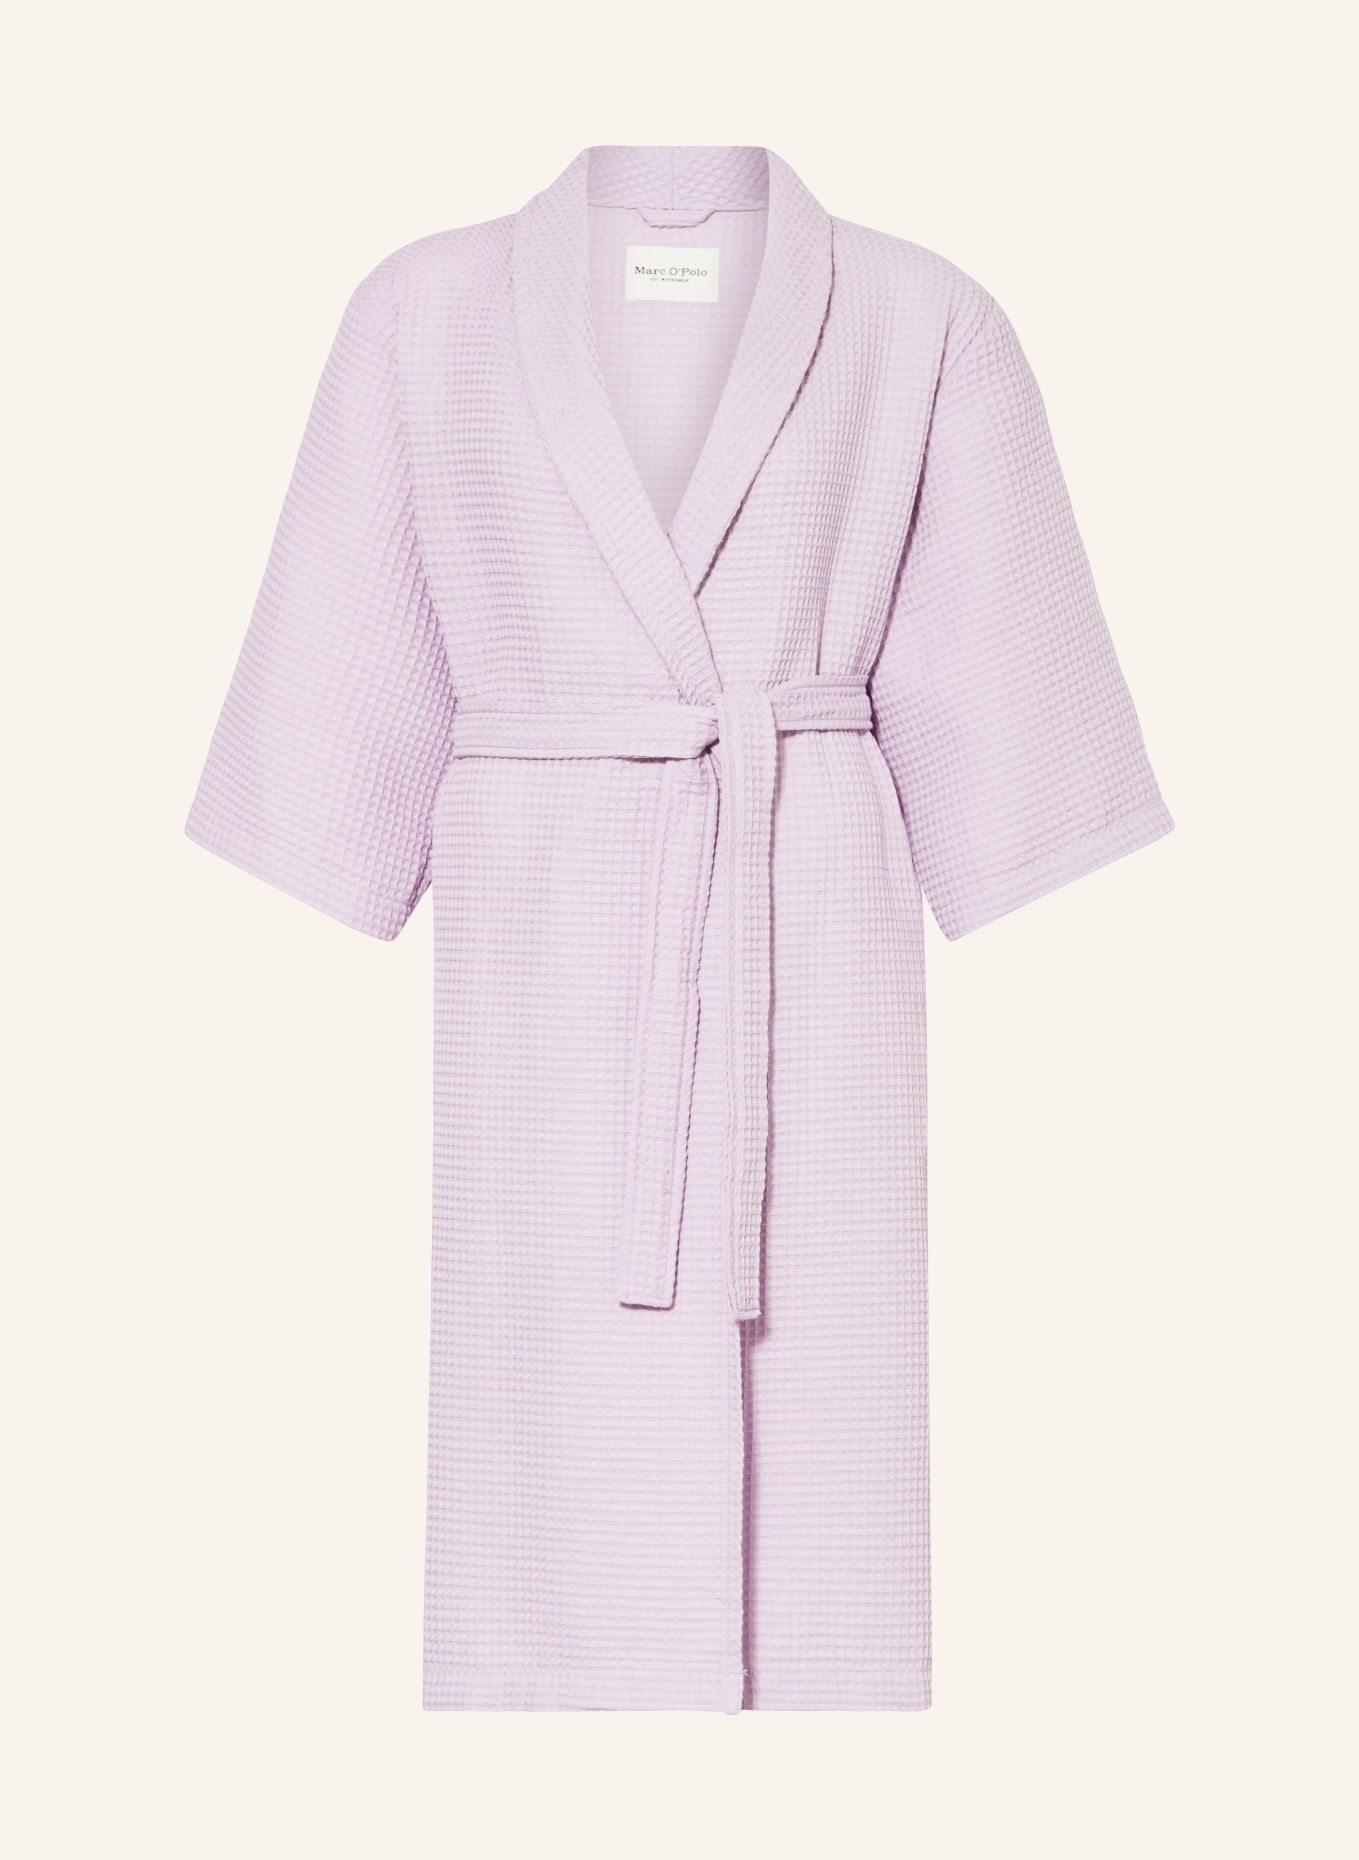 Marc O'Polo Women’s bathrobe, Color: LIGHT PURPLE (Image 1)